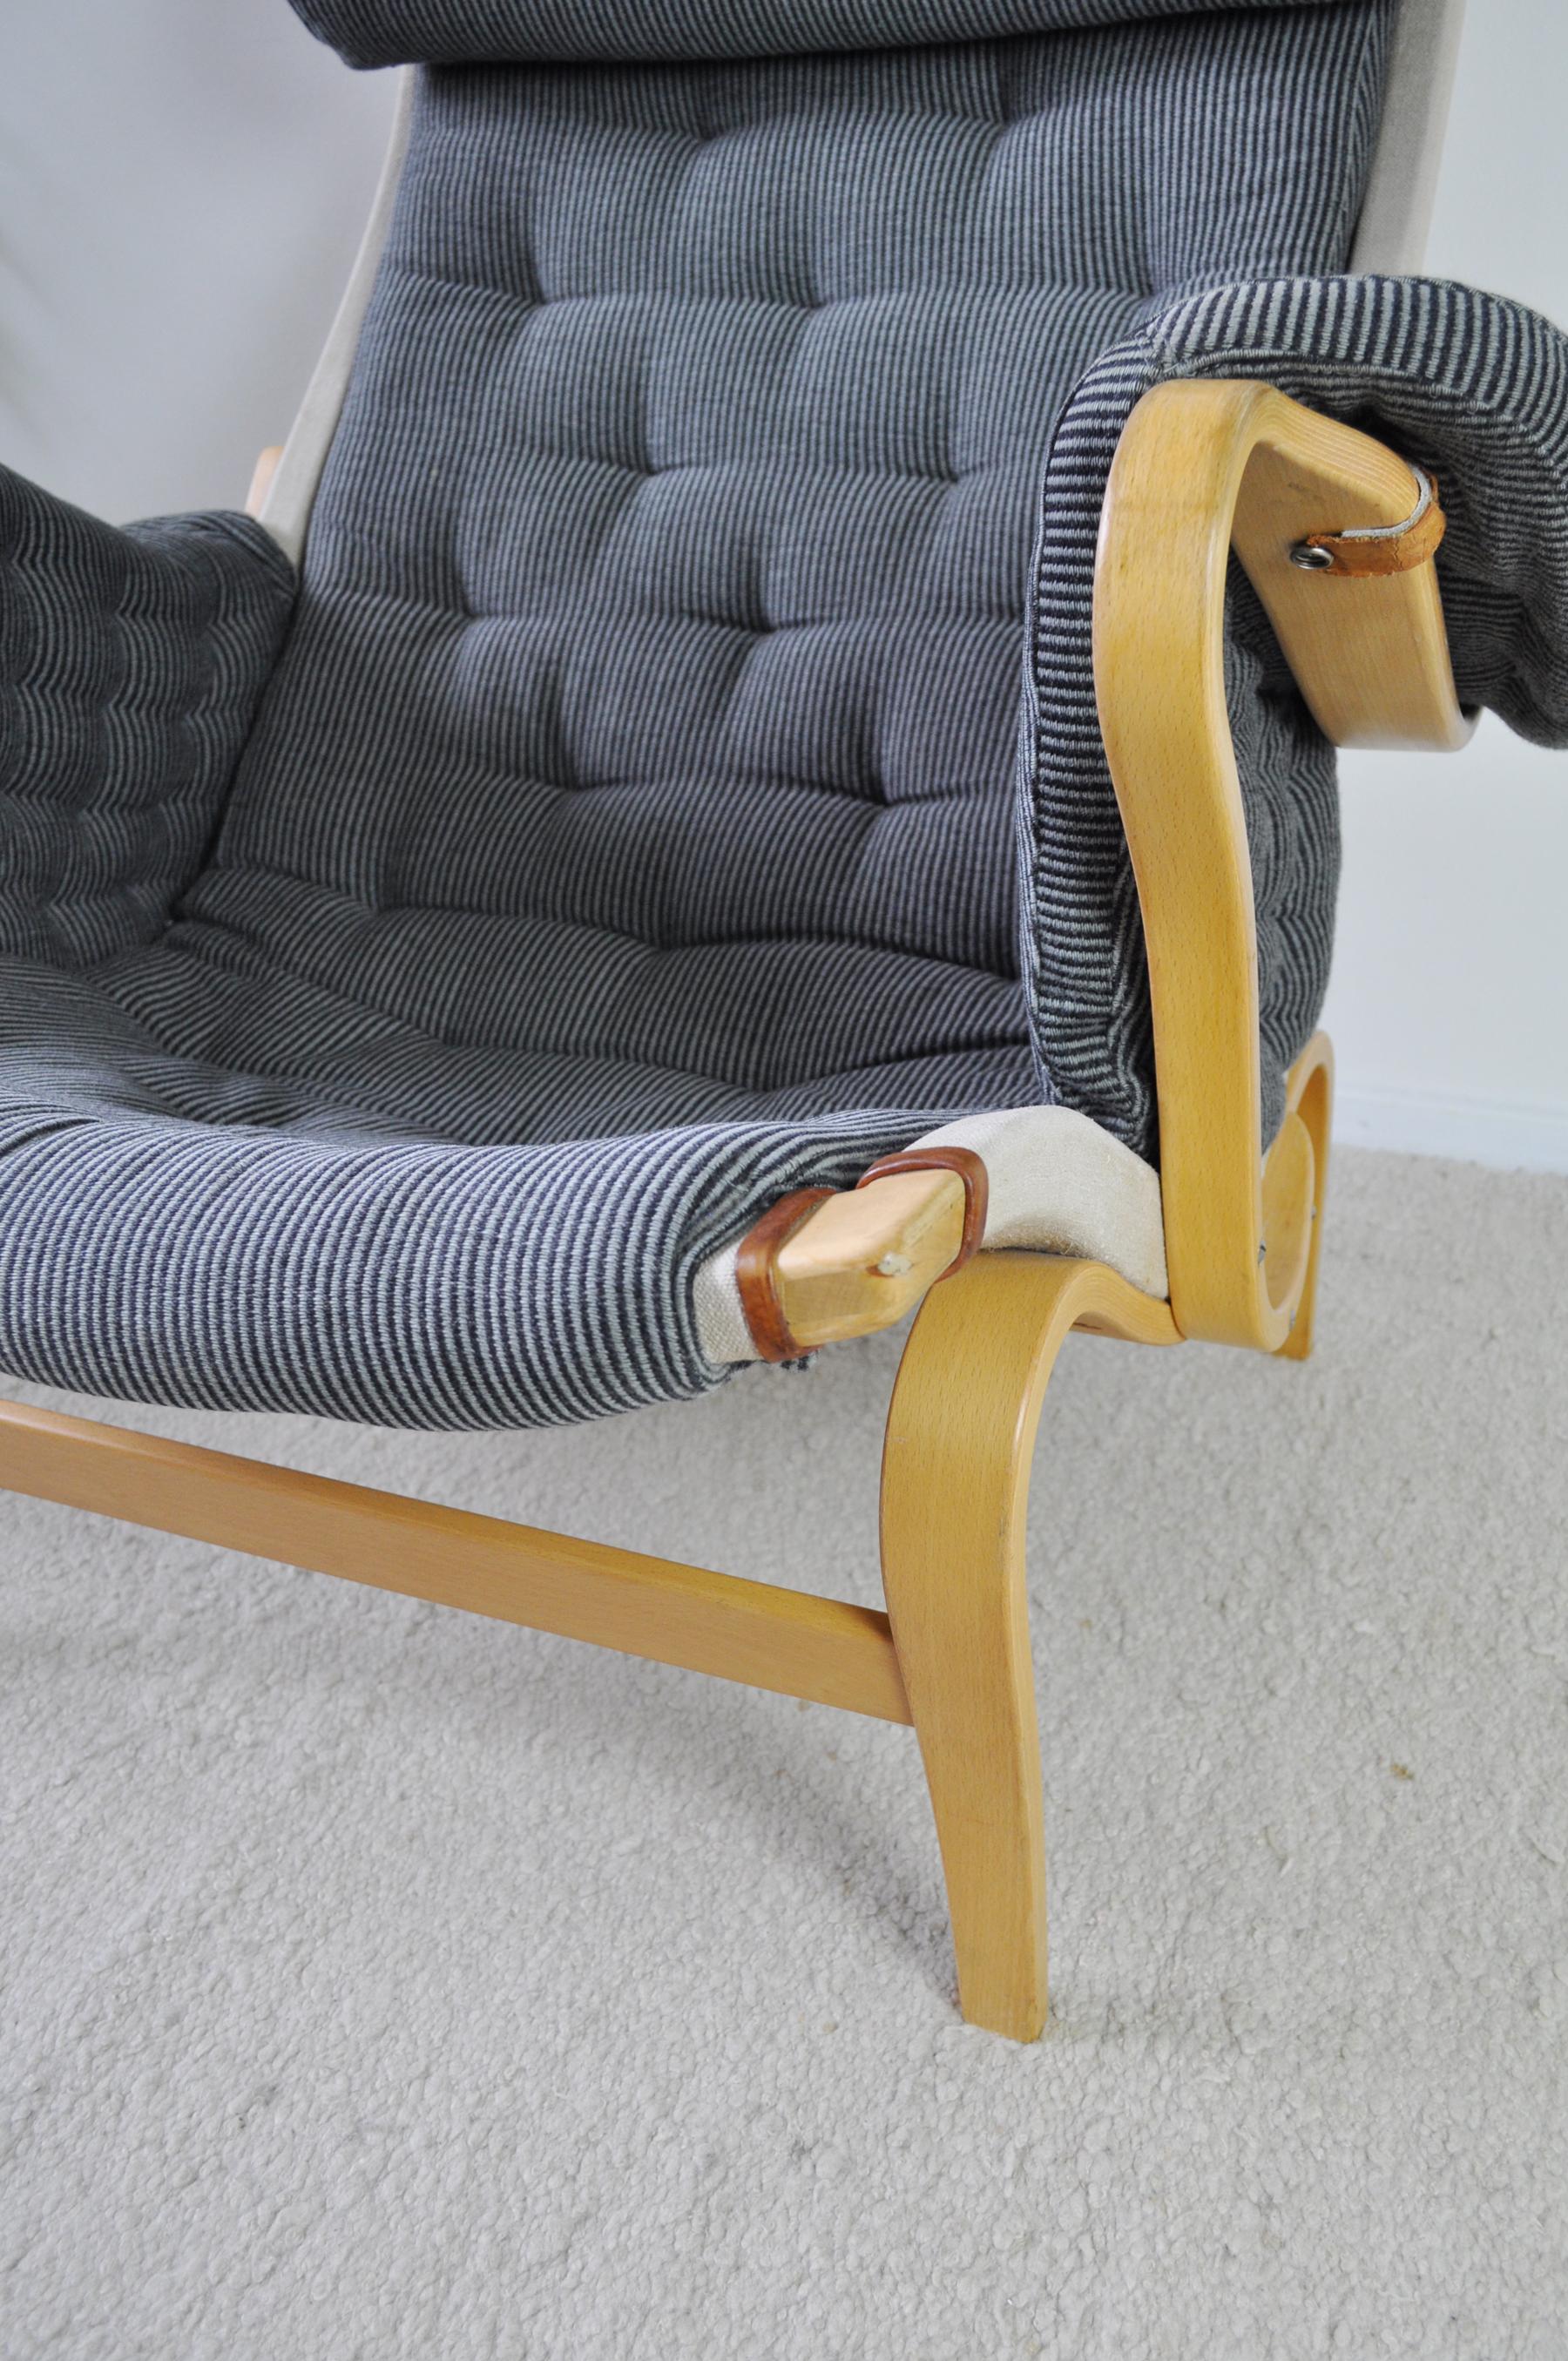 Fabric Bruno Mathsson Lounge Chair Pernilla 69 for DUX, Sweden